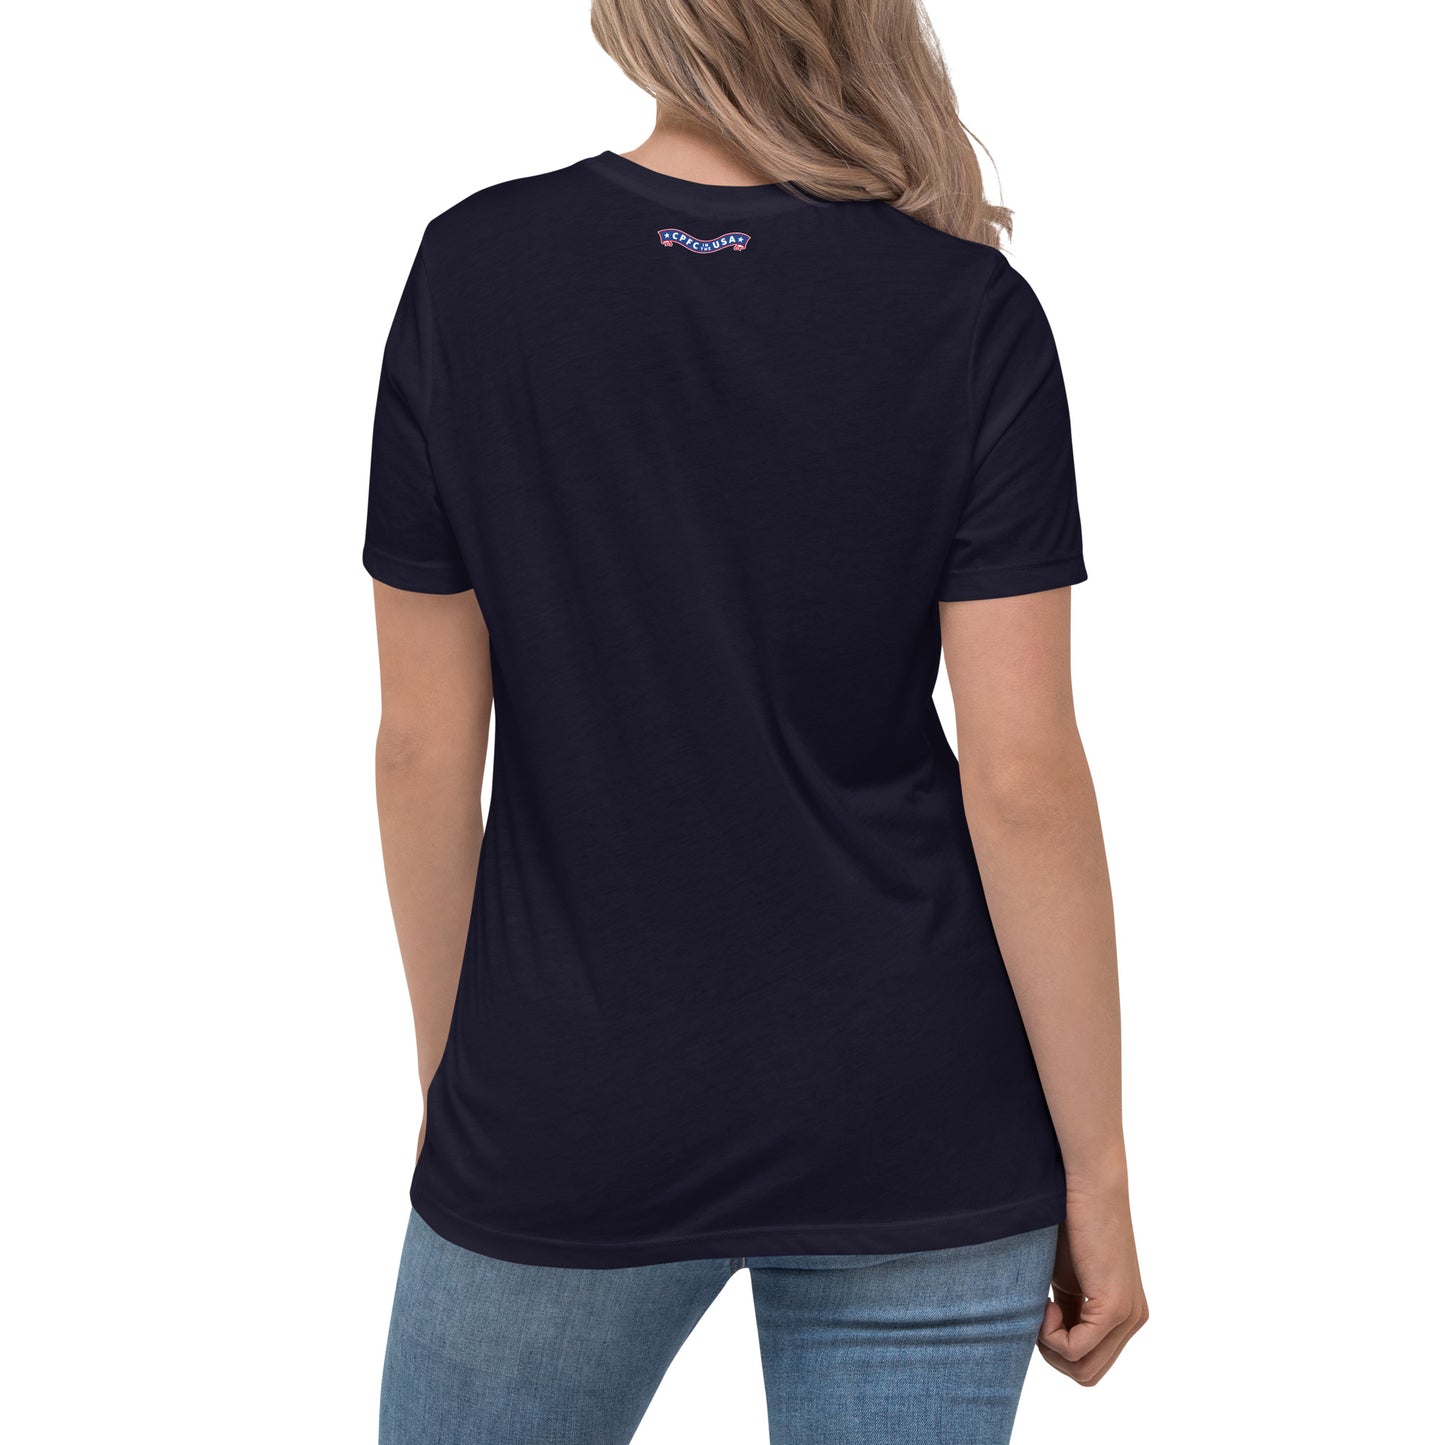 CPFC USA Logo Women's Relaxed T-Shirt